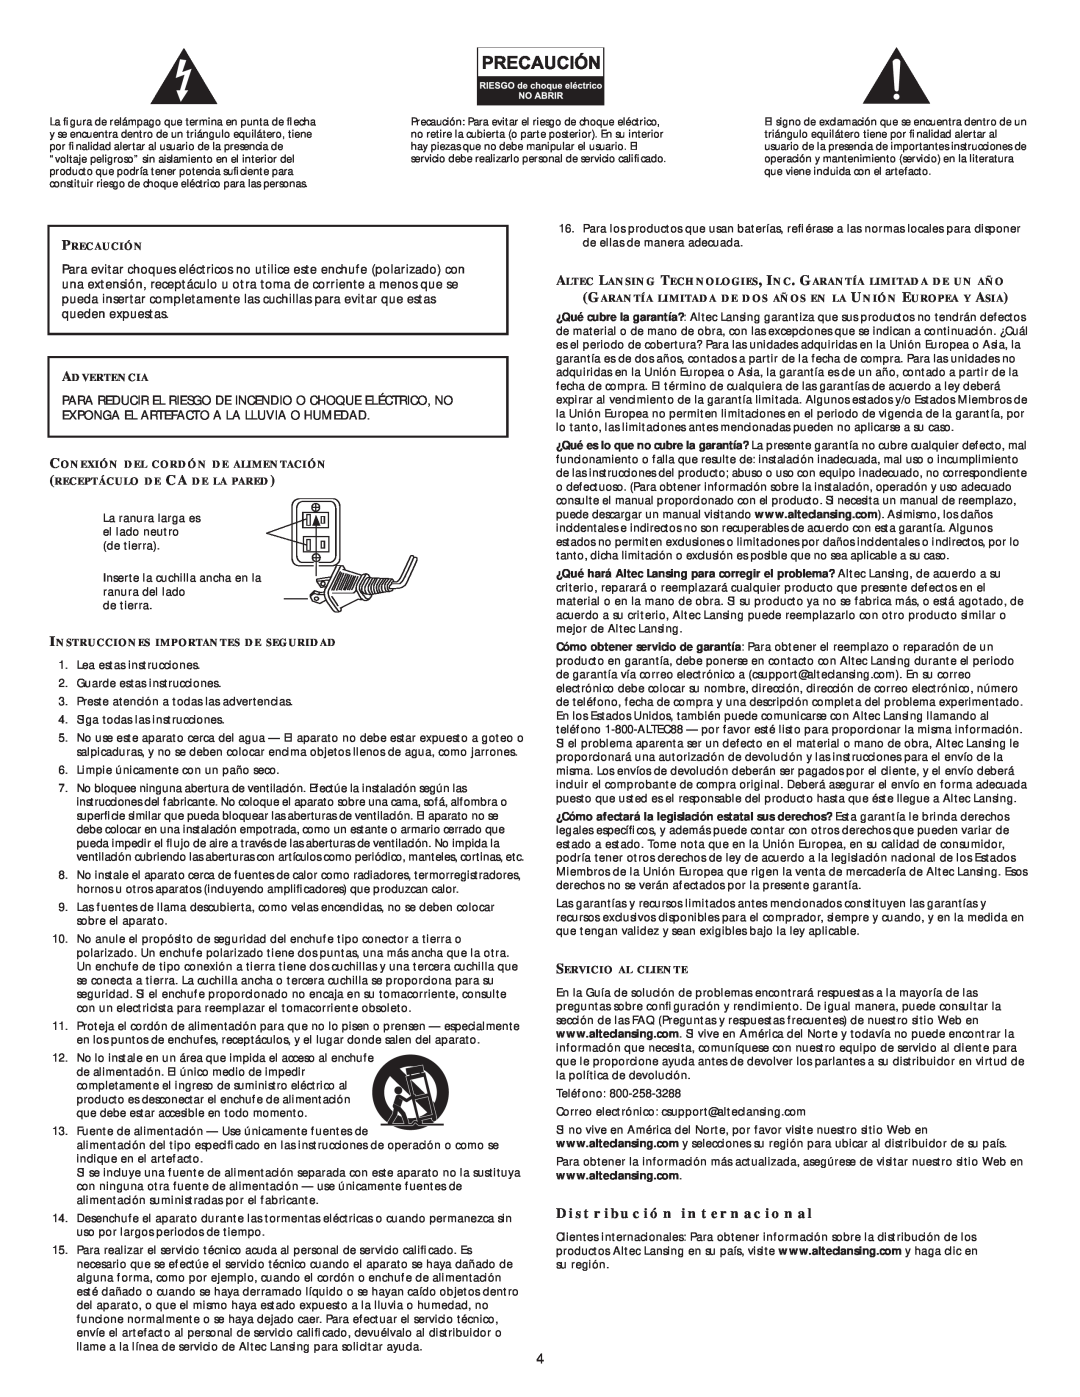 Altec Lansing BB2001 manual Distribución internacional 